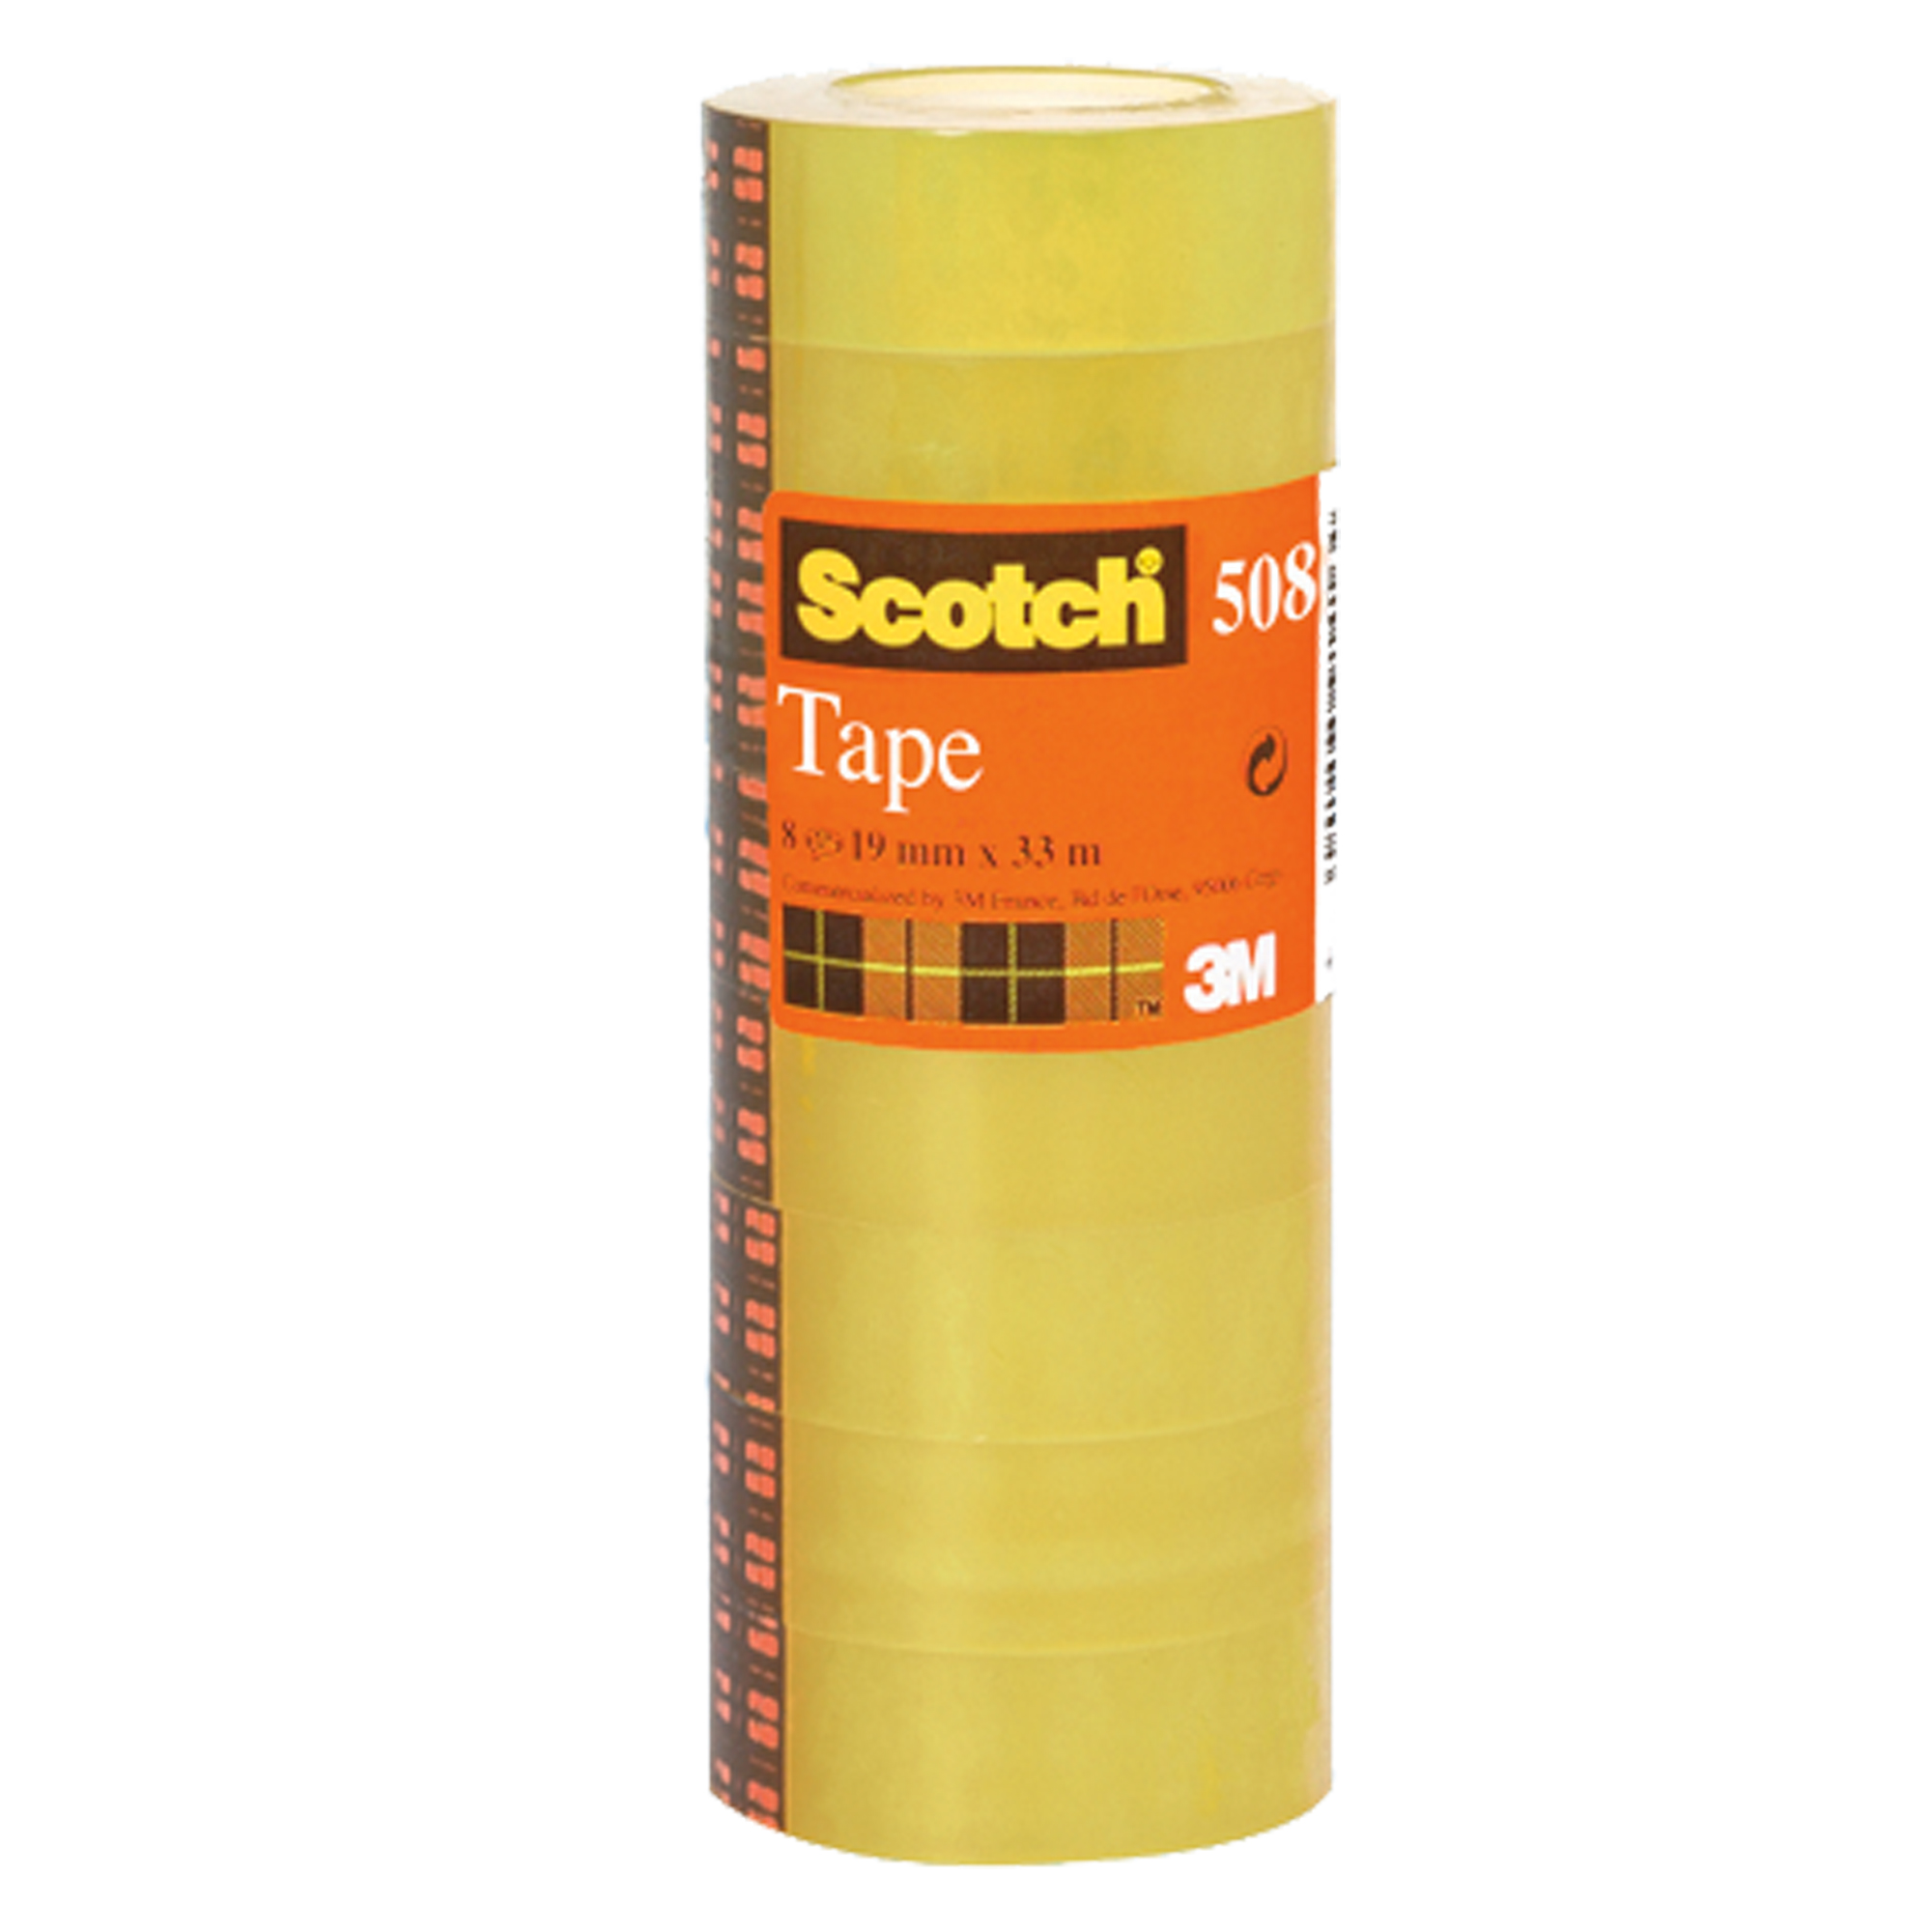 Nastro adesivo Scotch  508 - 15 mm x 10 mt - trasparente - Scotch  -  torre 10 rotoli